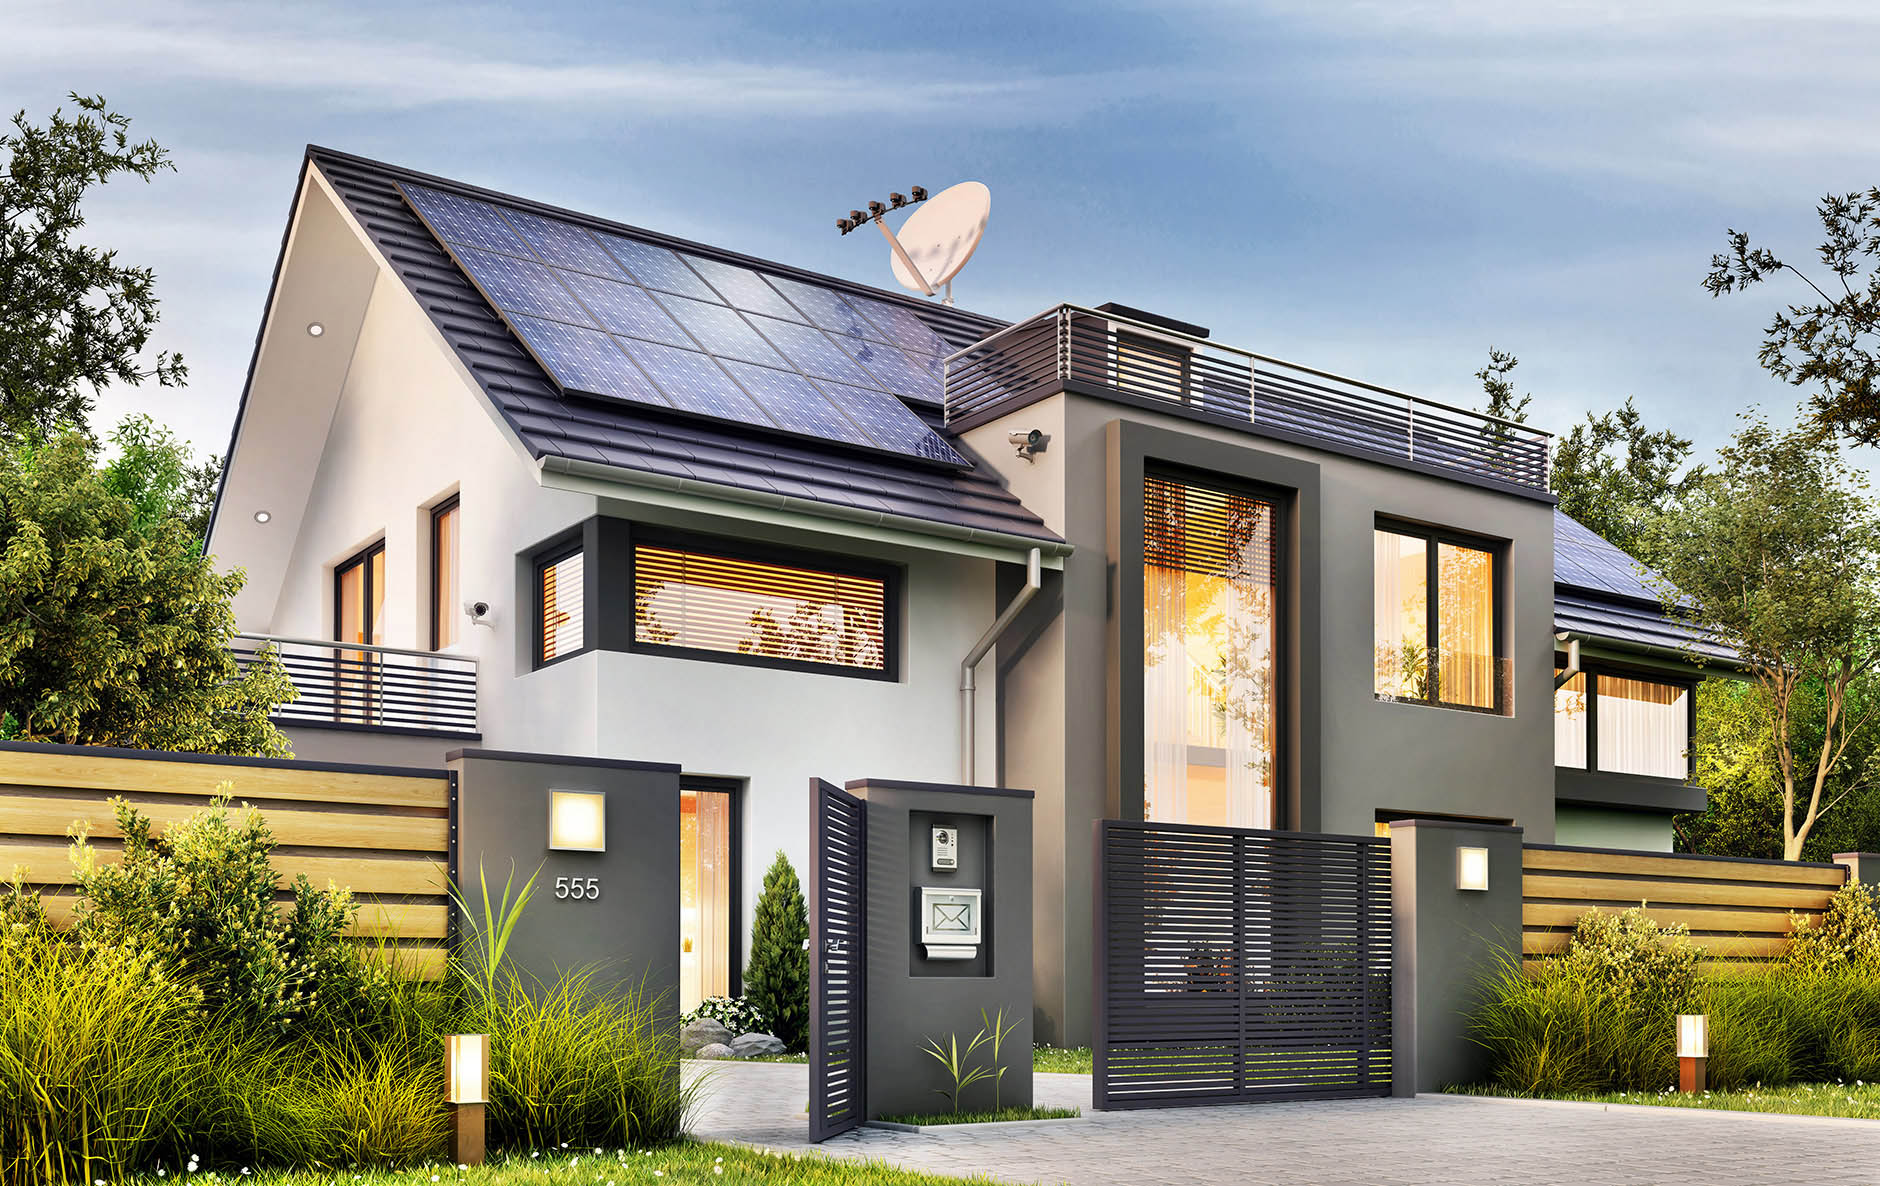 How banks can help boost energy efficiency in Australian homes